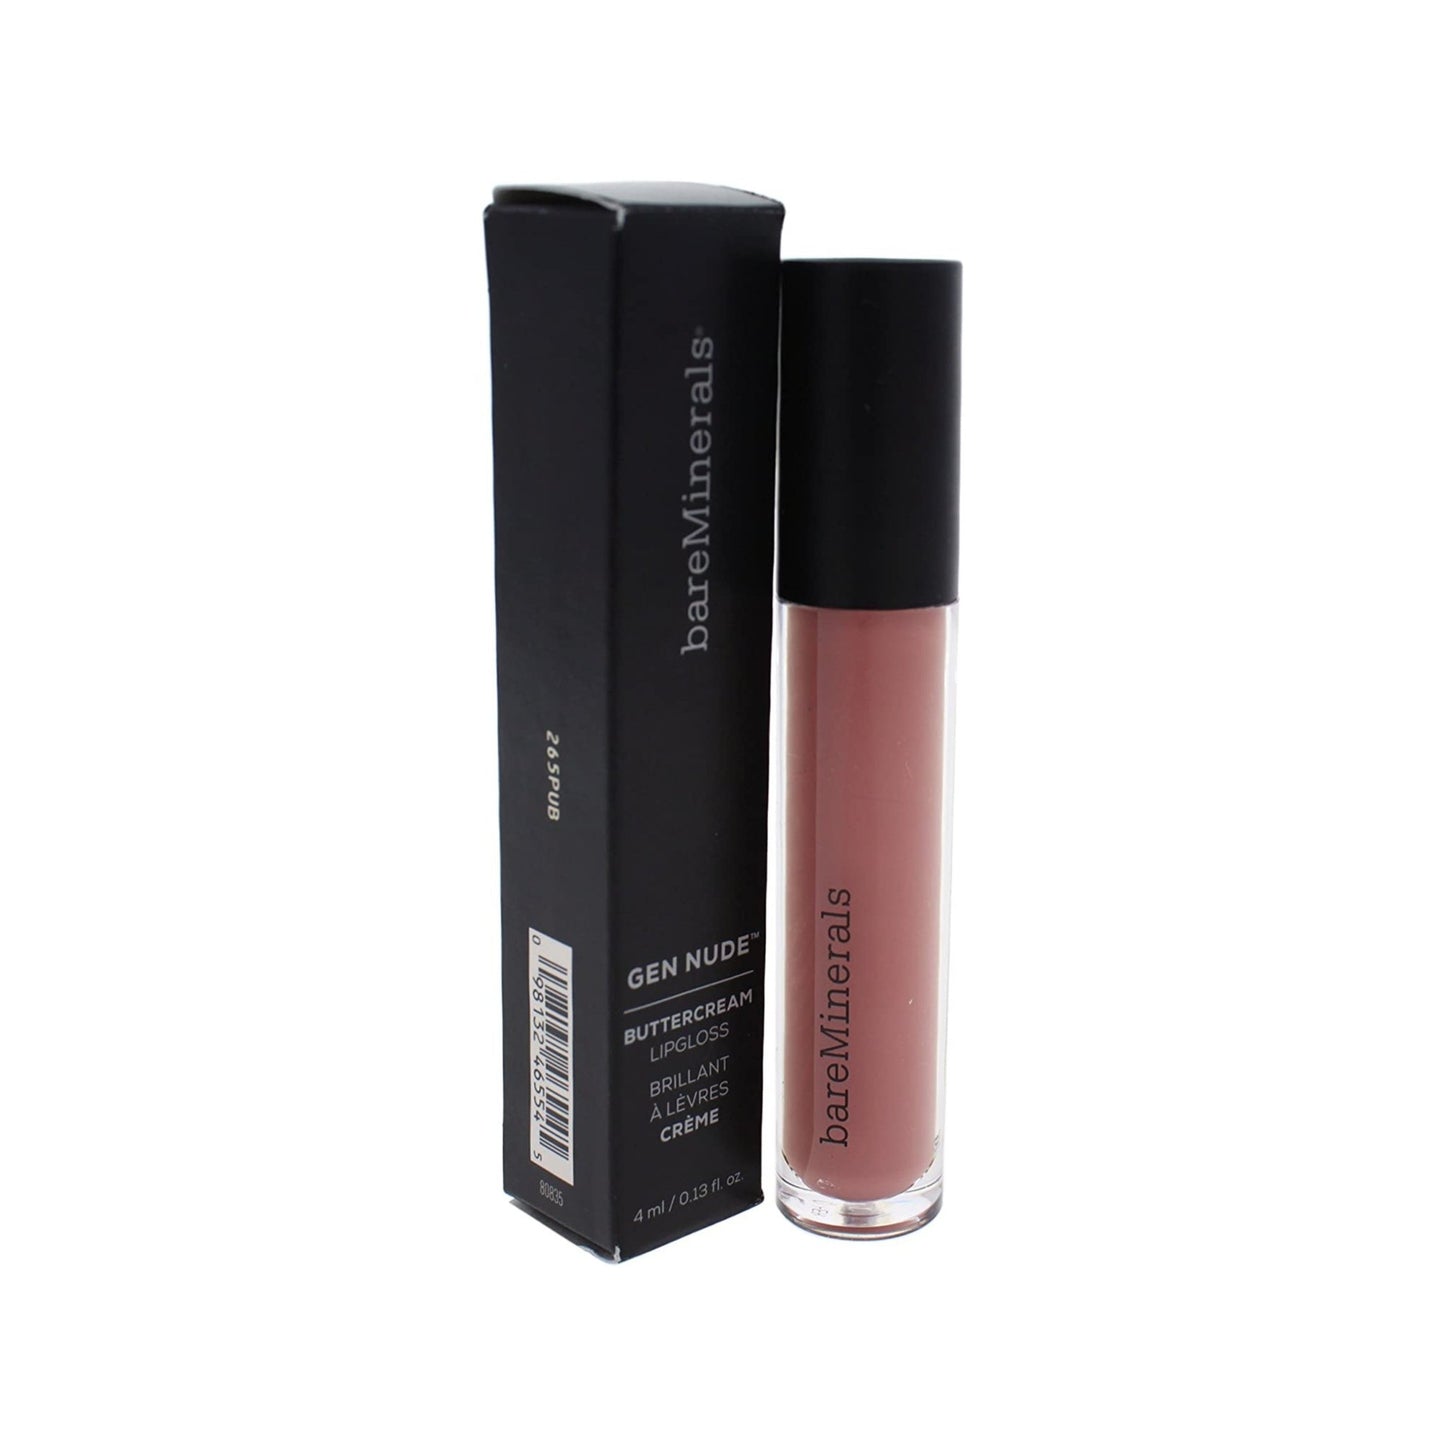 bareMinerals-bareMinerals Gen Nude Buttercream Lip Color -for Women - 0.13 oz - Brandat Outlet